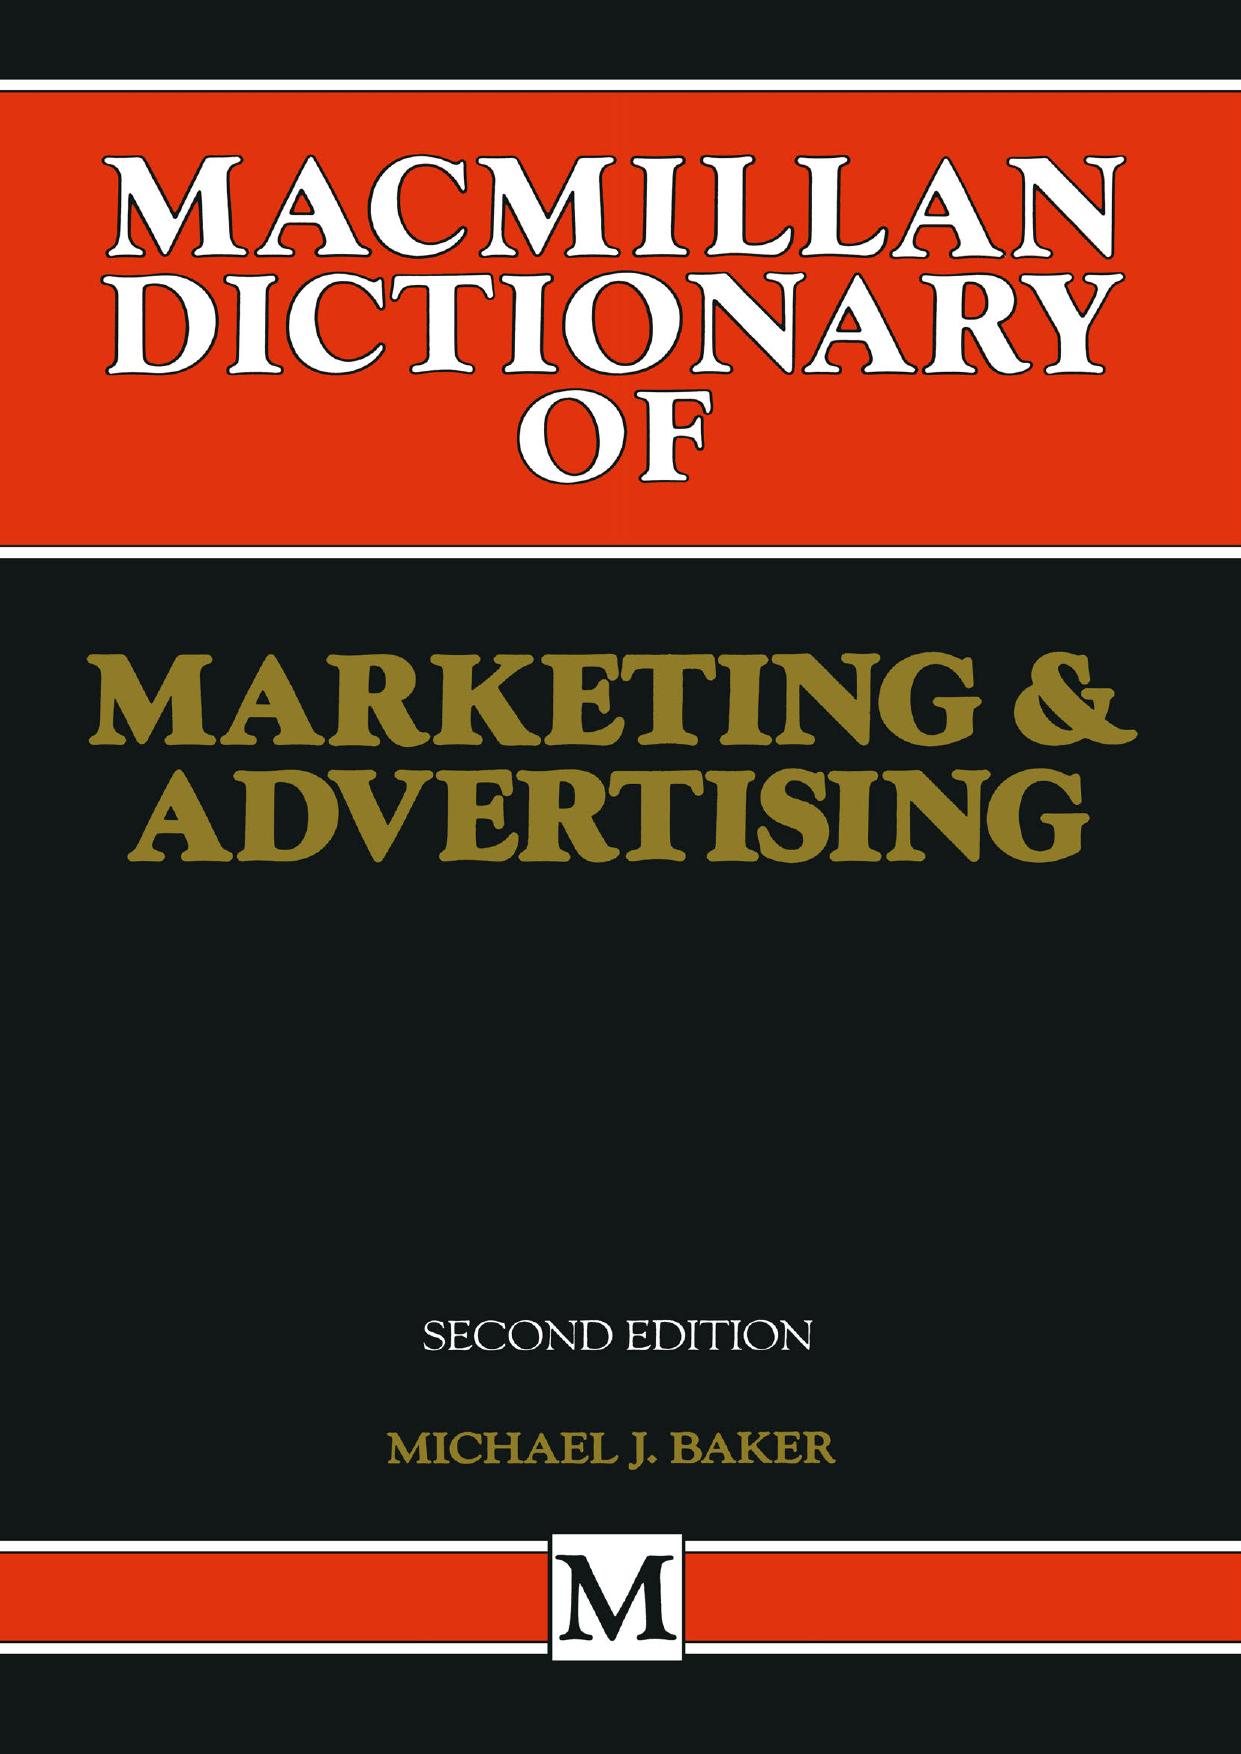 Macmillan Dictionary of Marketing & Advertising